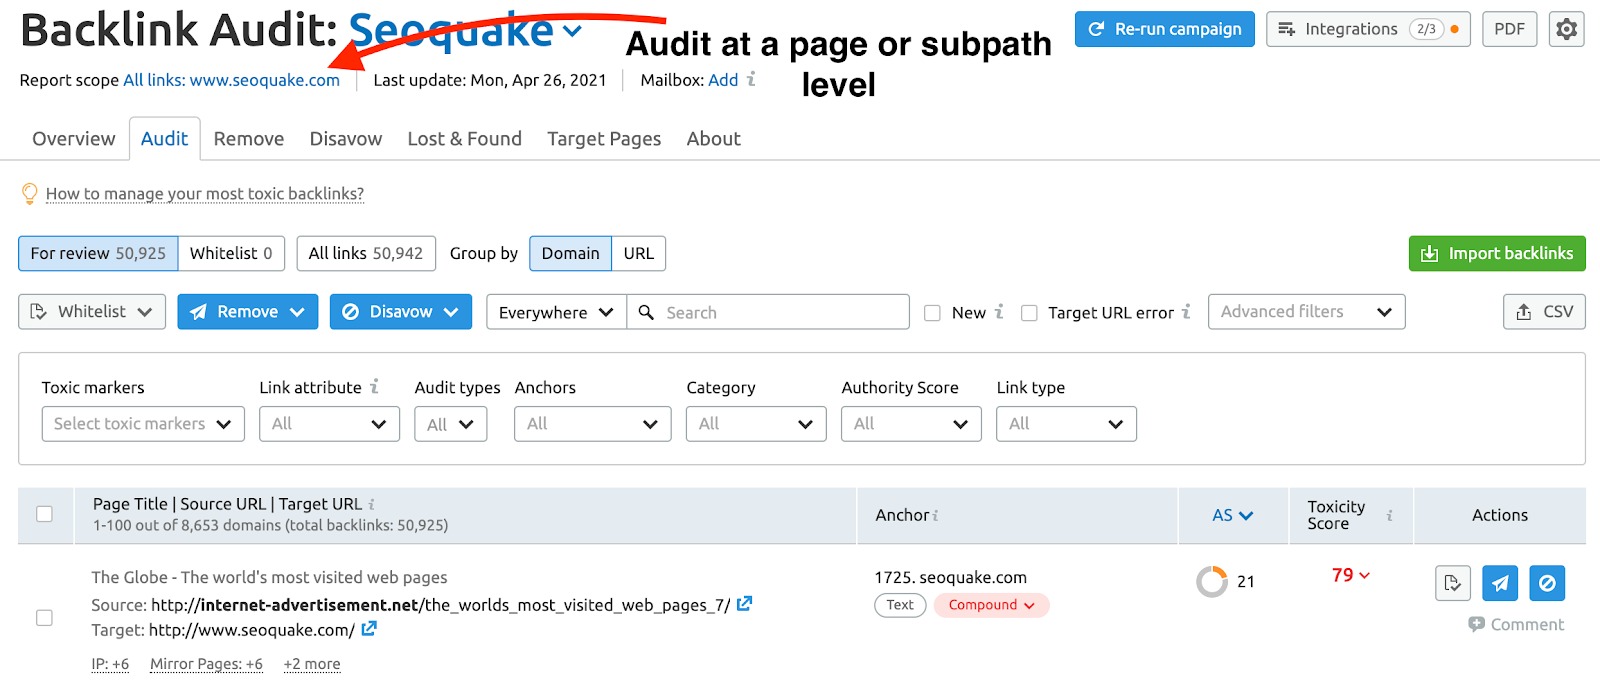 Cómo auditar tus backlinks image 1